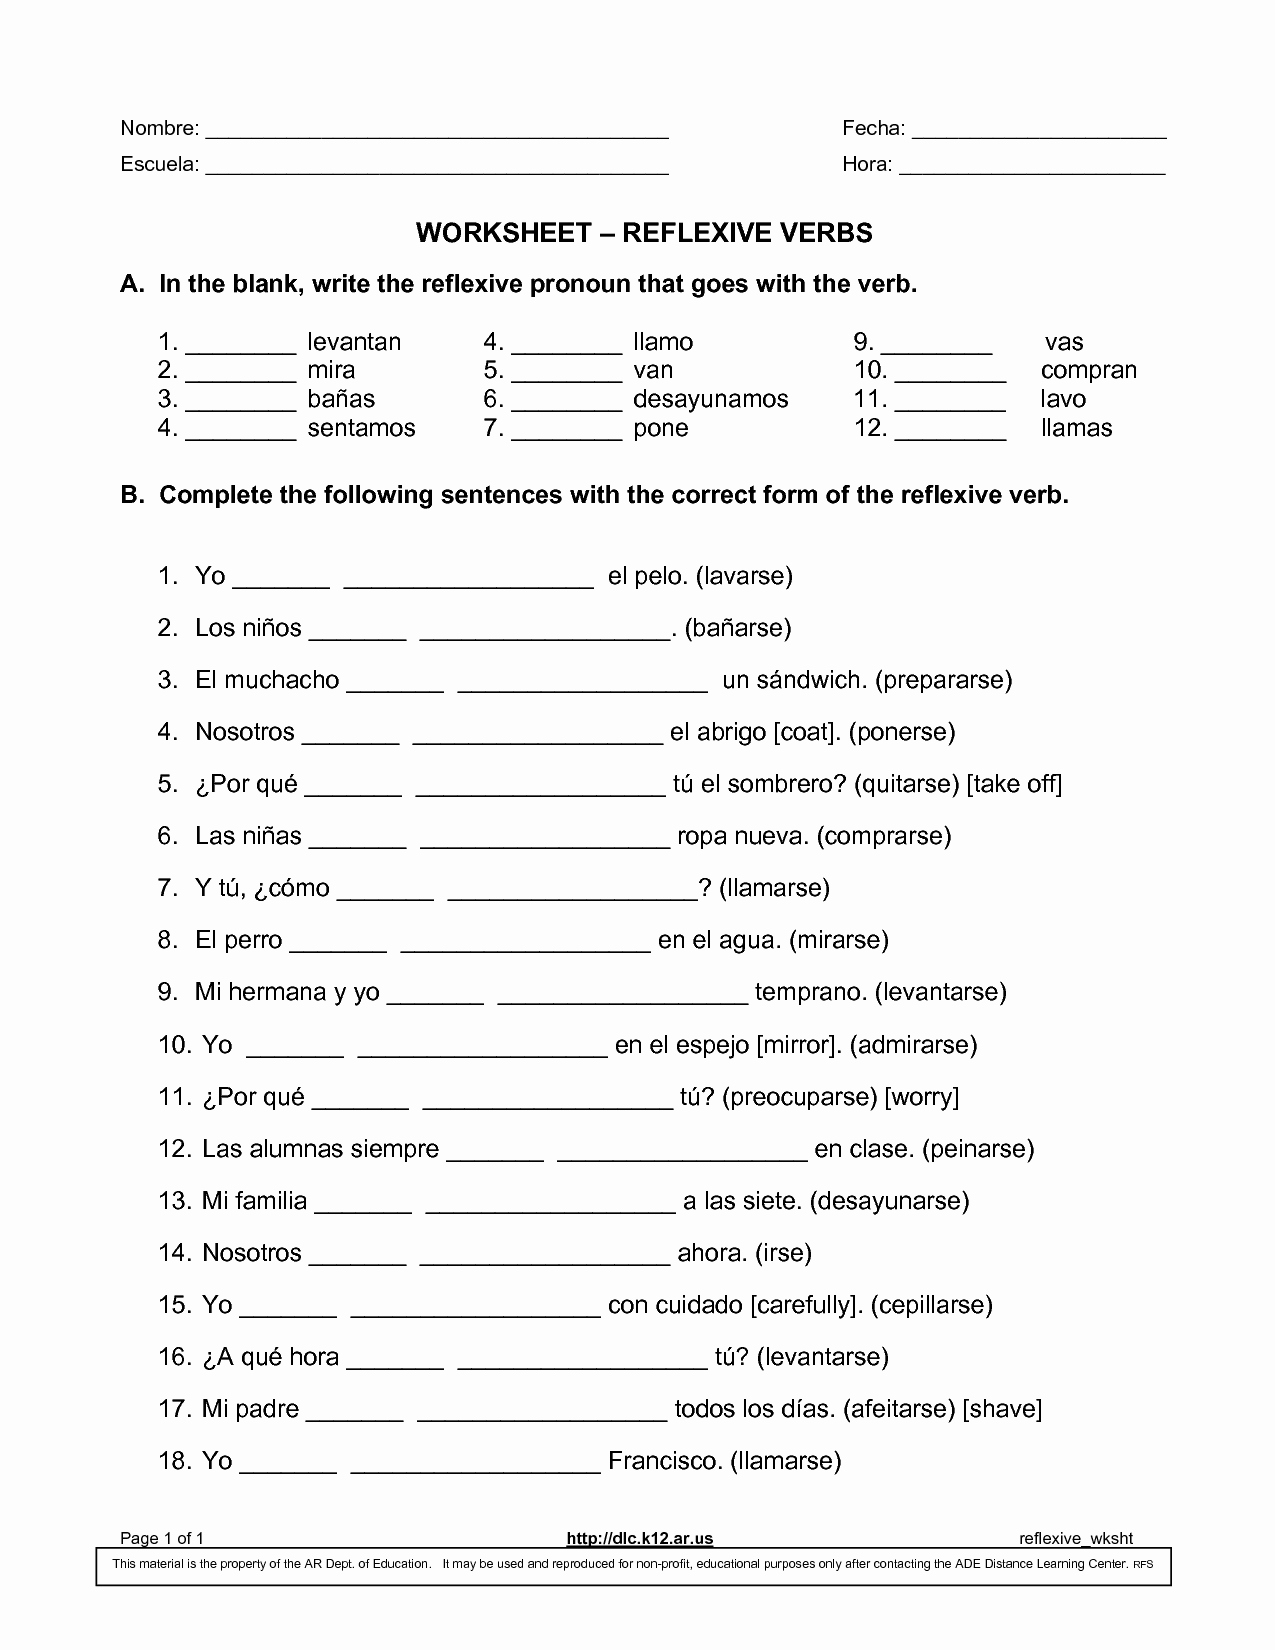 Spanish Reflexive Verbs Worksheet Printable Awesome 26 Reflexive Verbs Spanish Worksheet Worksheet Project List